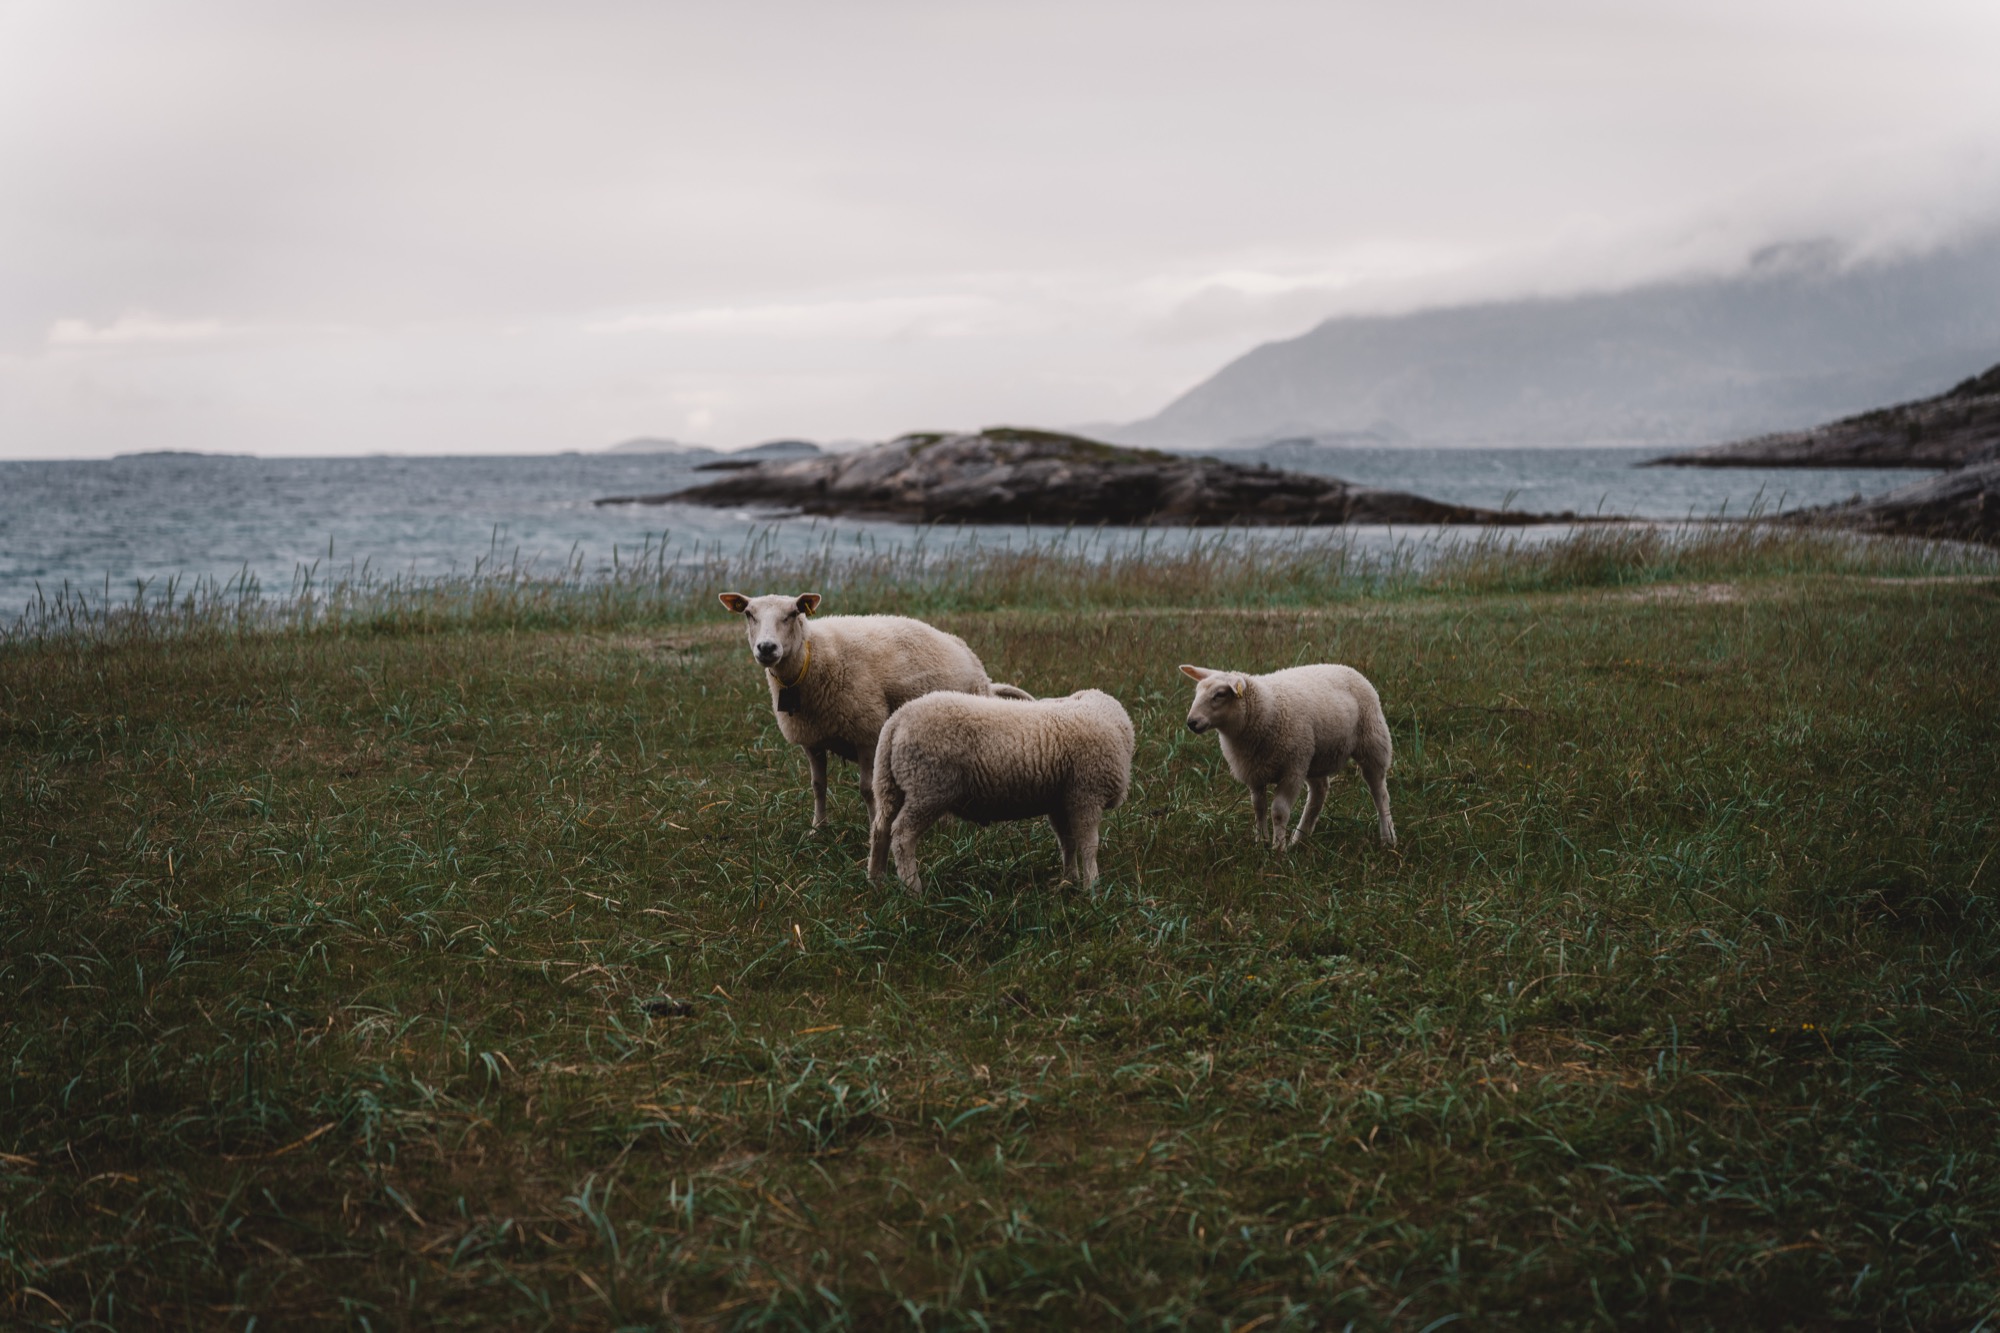 Moutons et agneaux norvège
Photo WildRosemarys